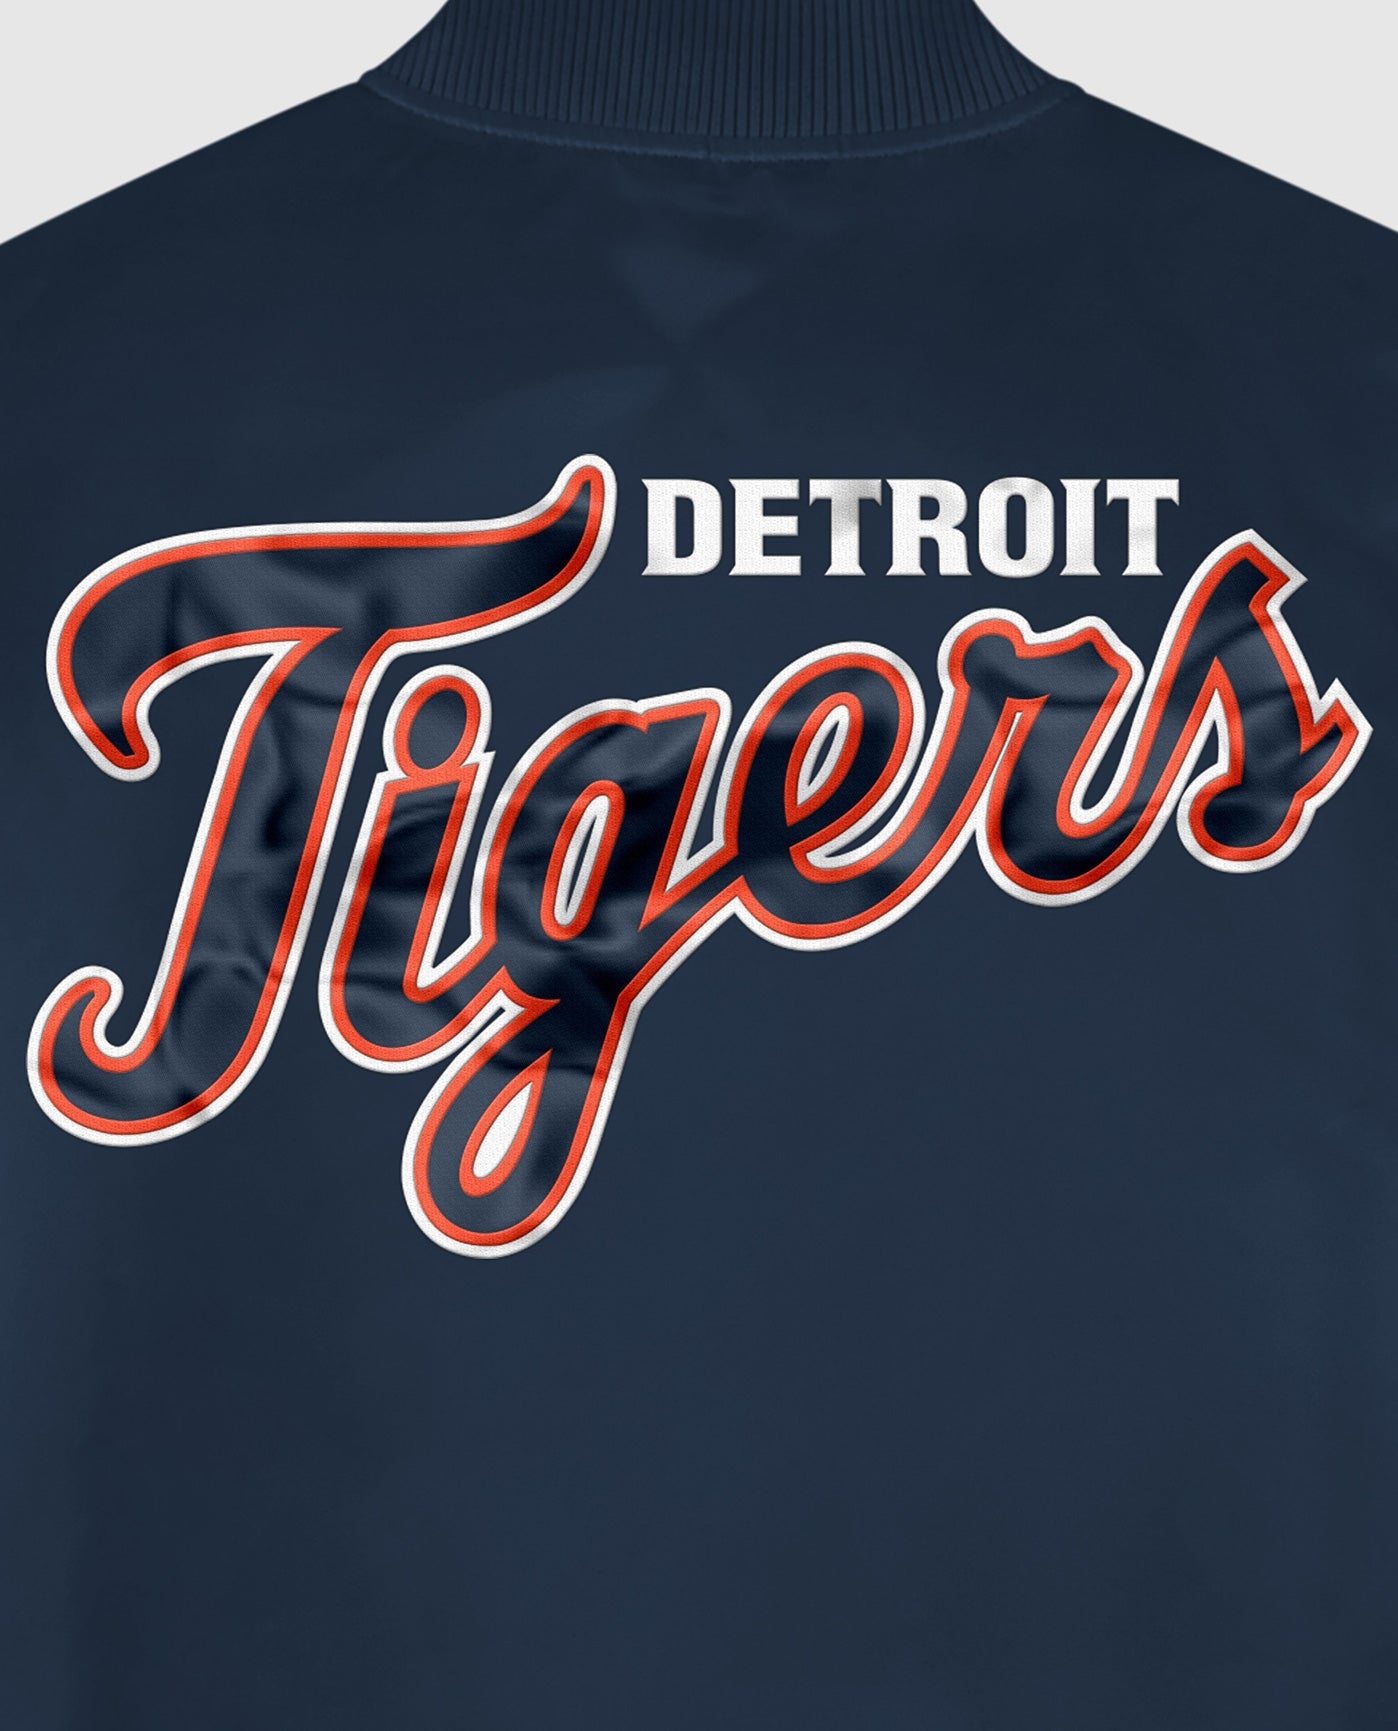 Starter Detroit Tigers Varsity Satin Full-Snap Jacket L / Tigers Navy Mens Outerwear